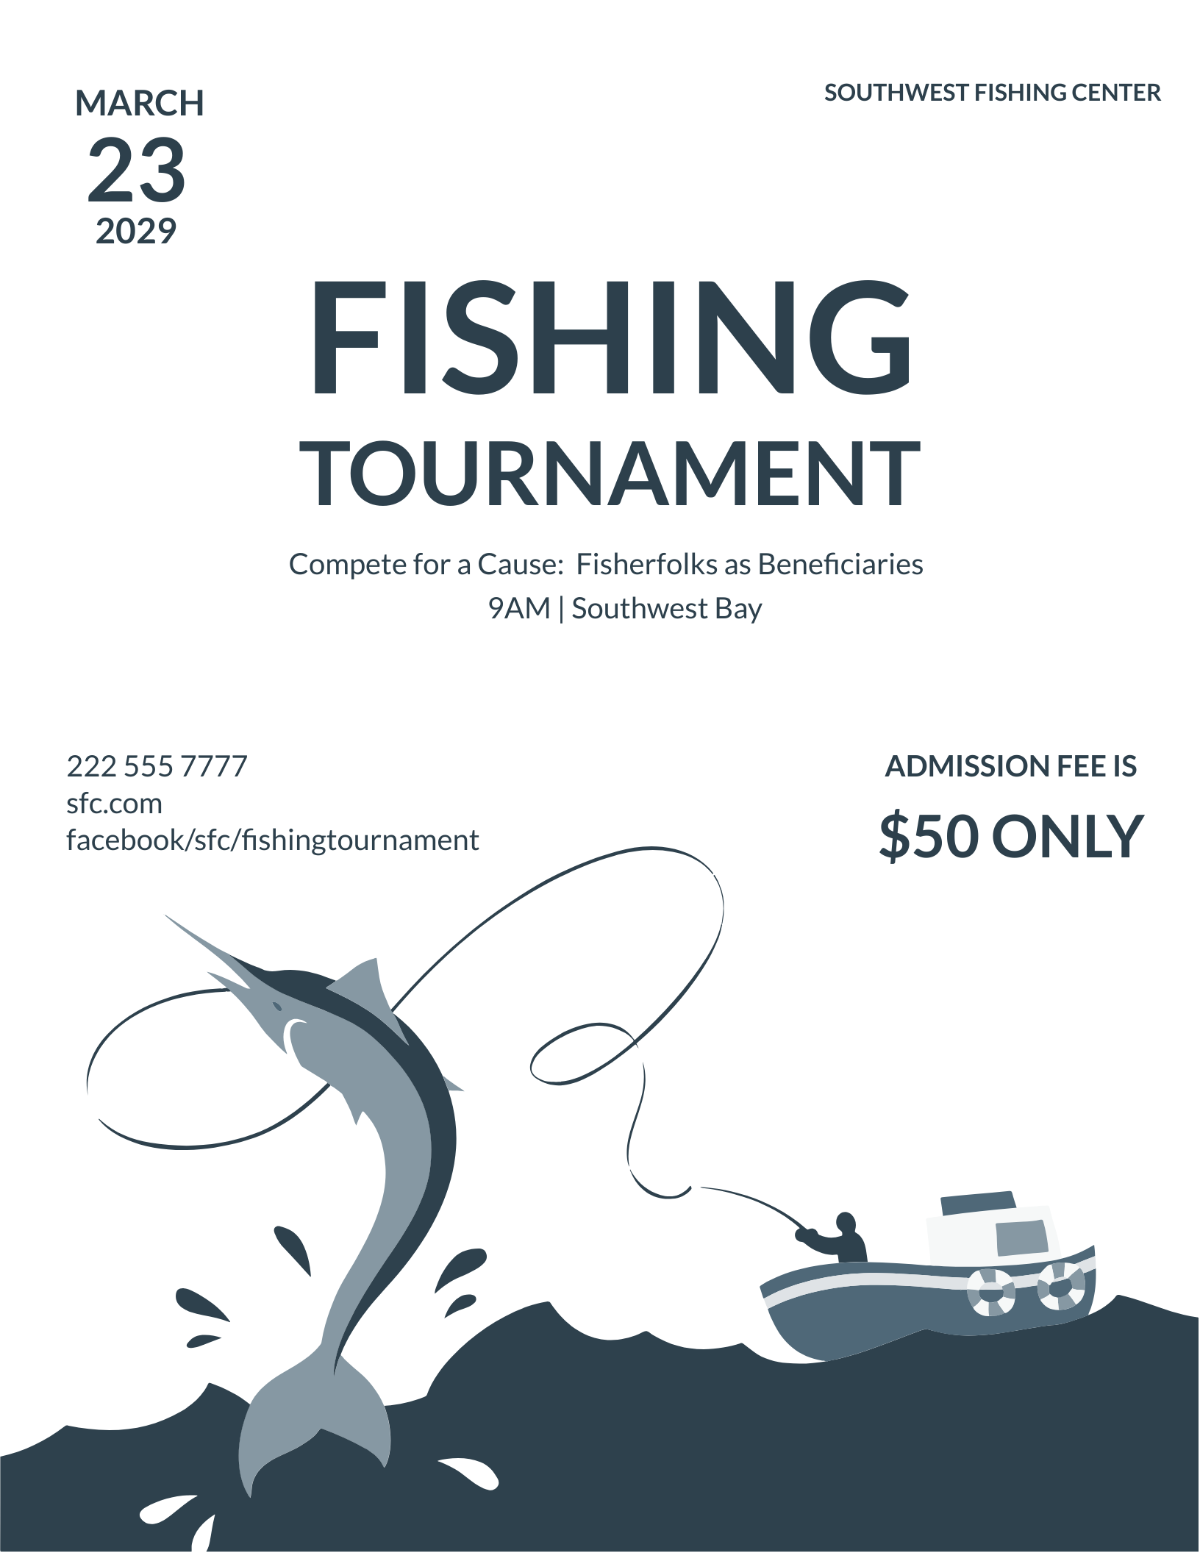 Fishing Contest Flyer